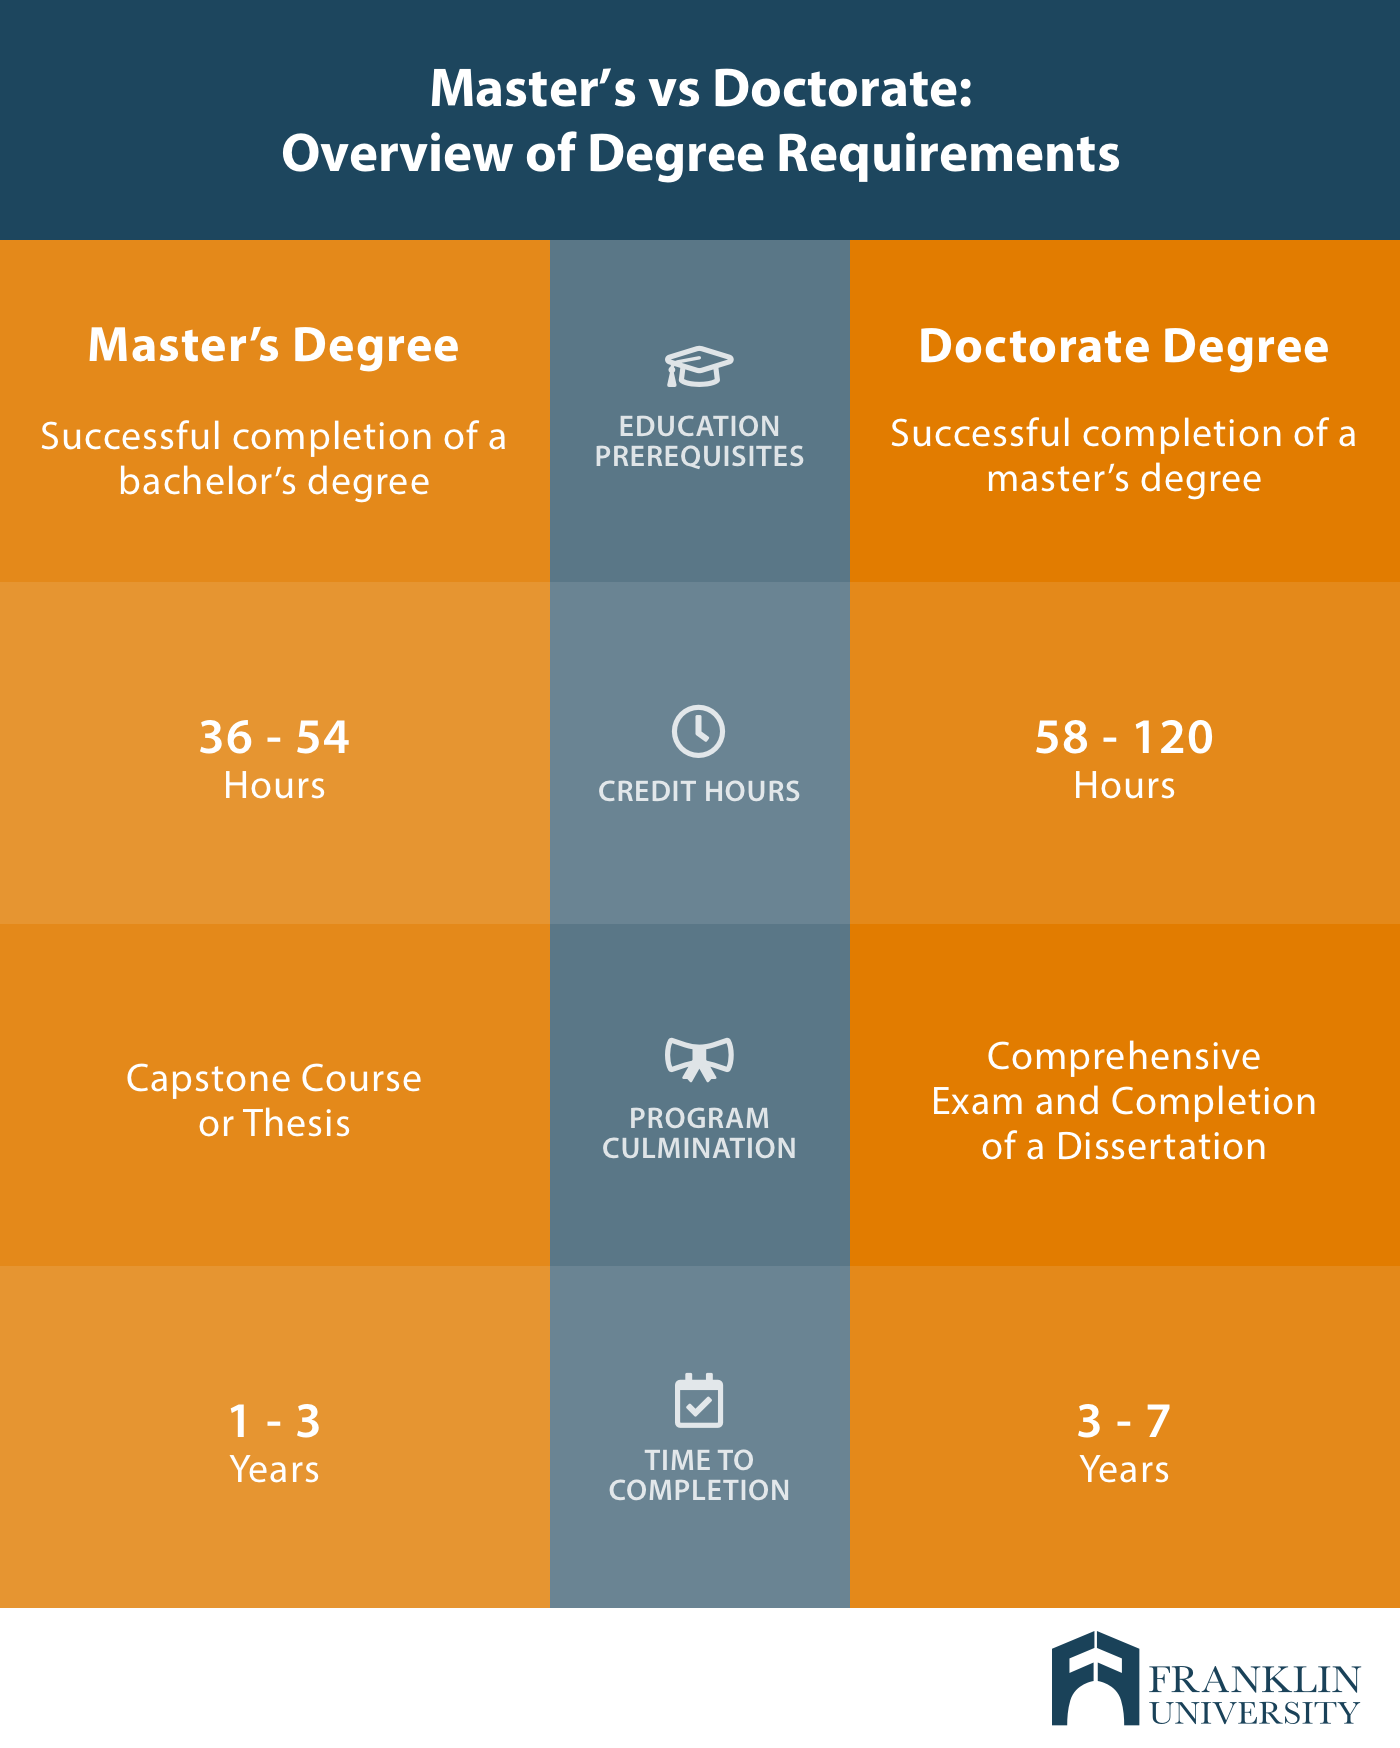 doctoral degree vs masters